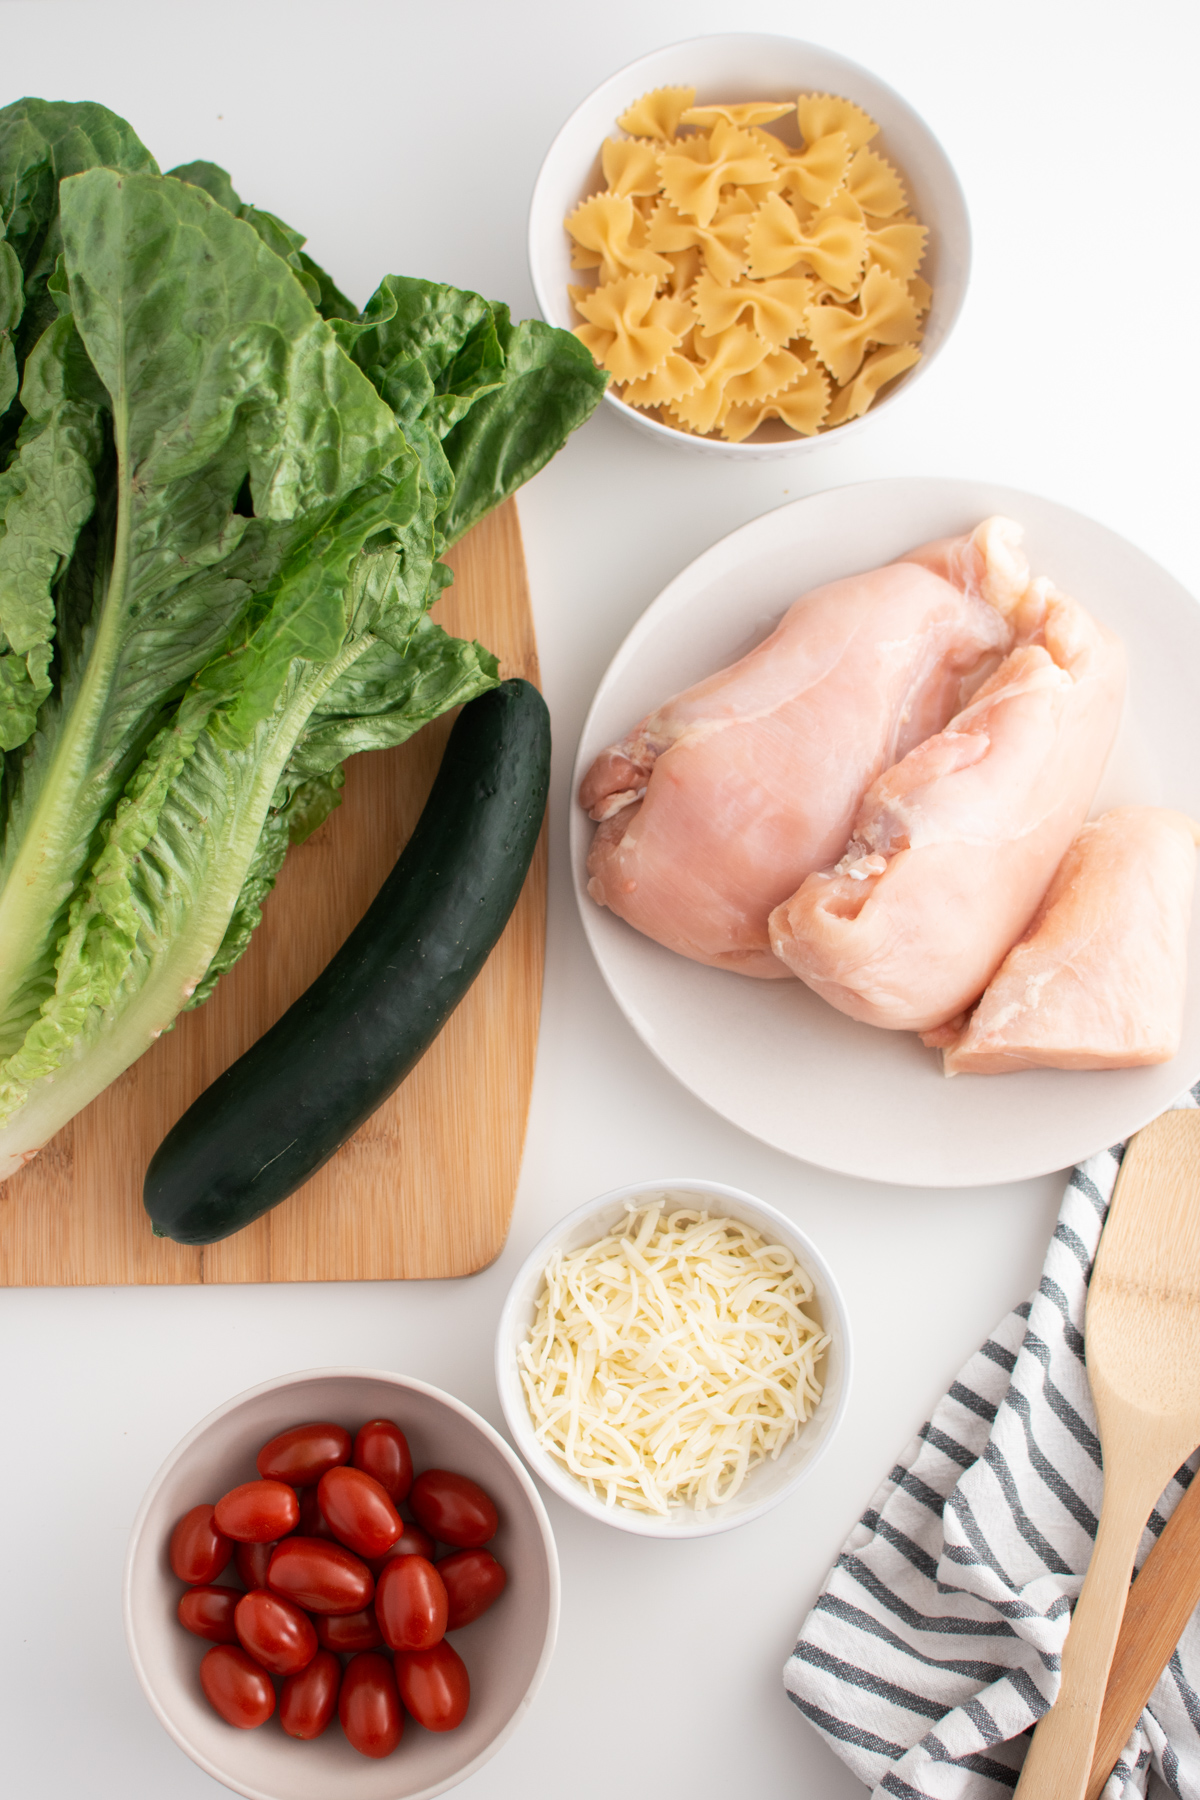 Chicken Caesar salad ingredients including lettuce, cucumber, raw chicken and bowtie pasta.